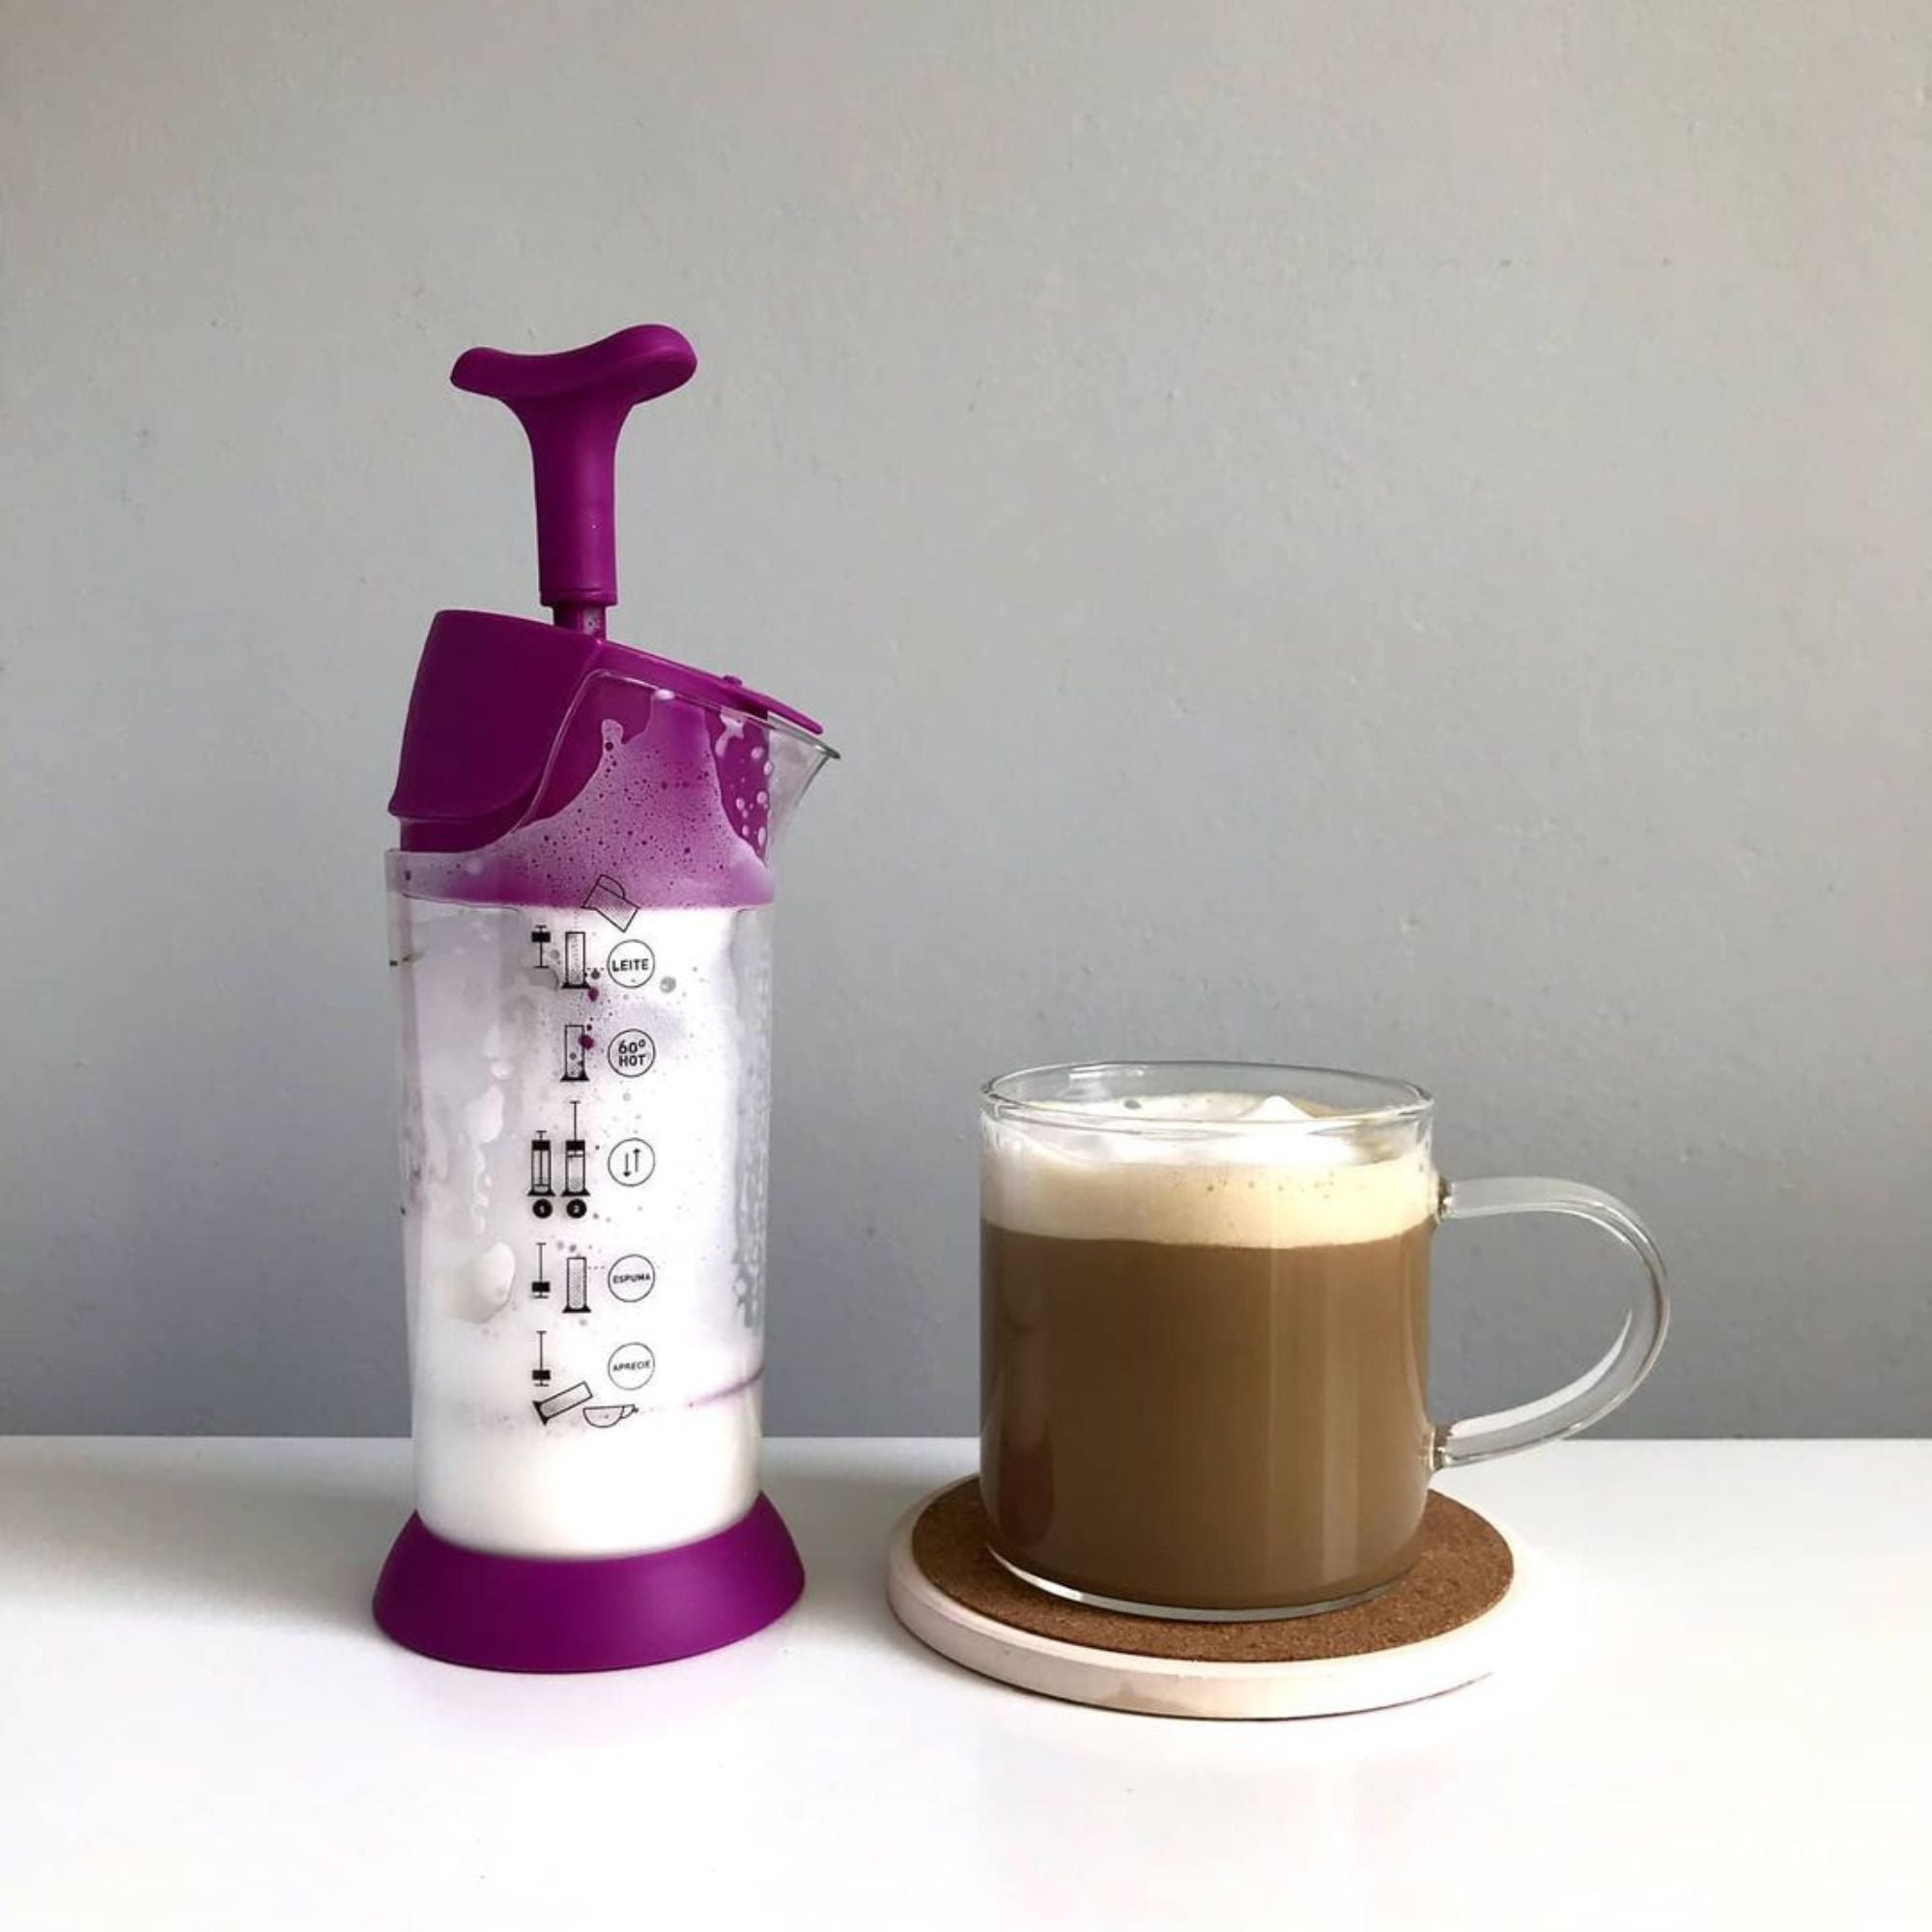 smtcoffee pressca milk frother